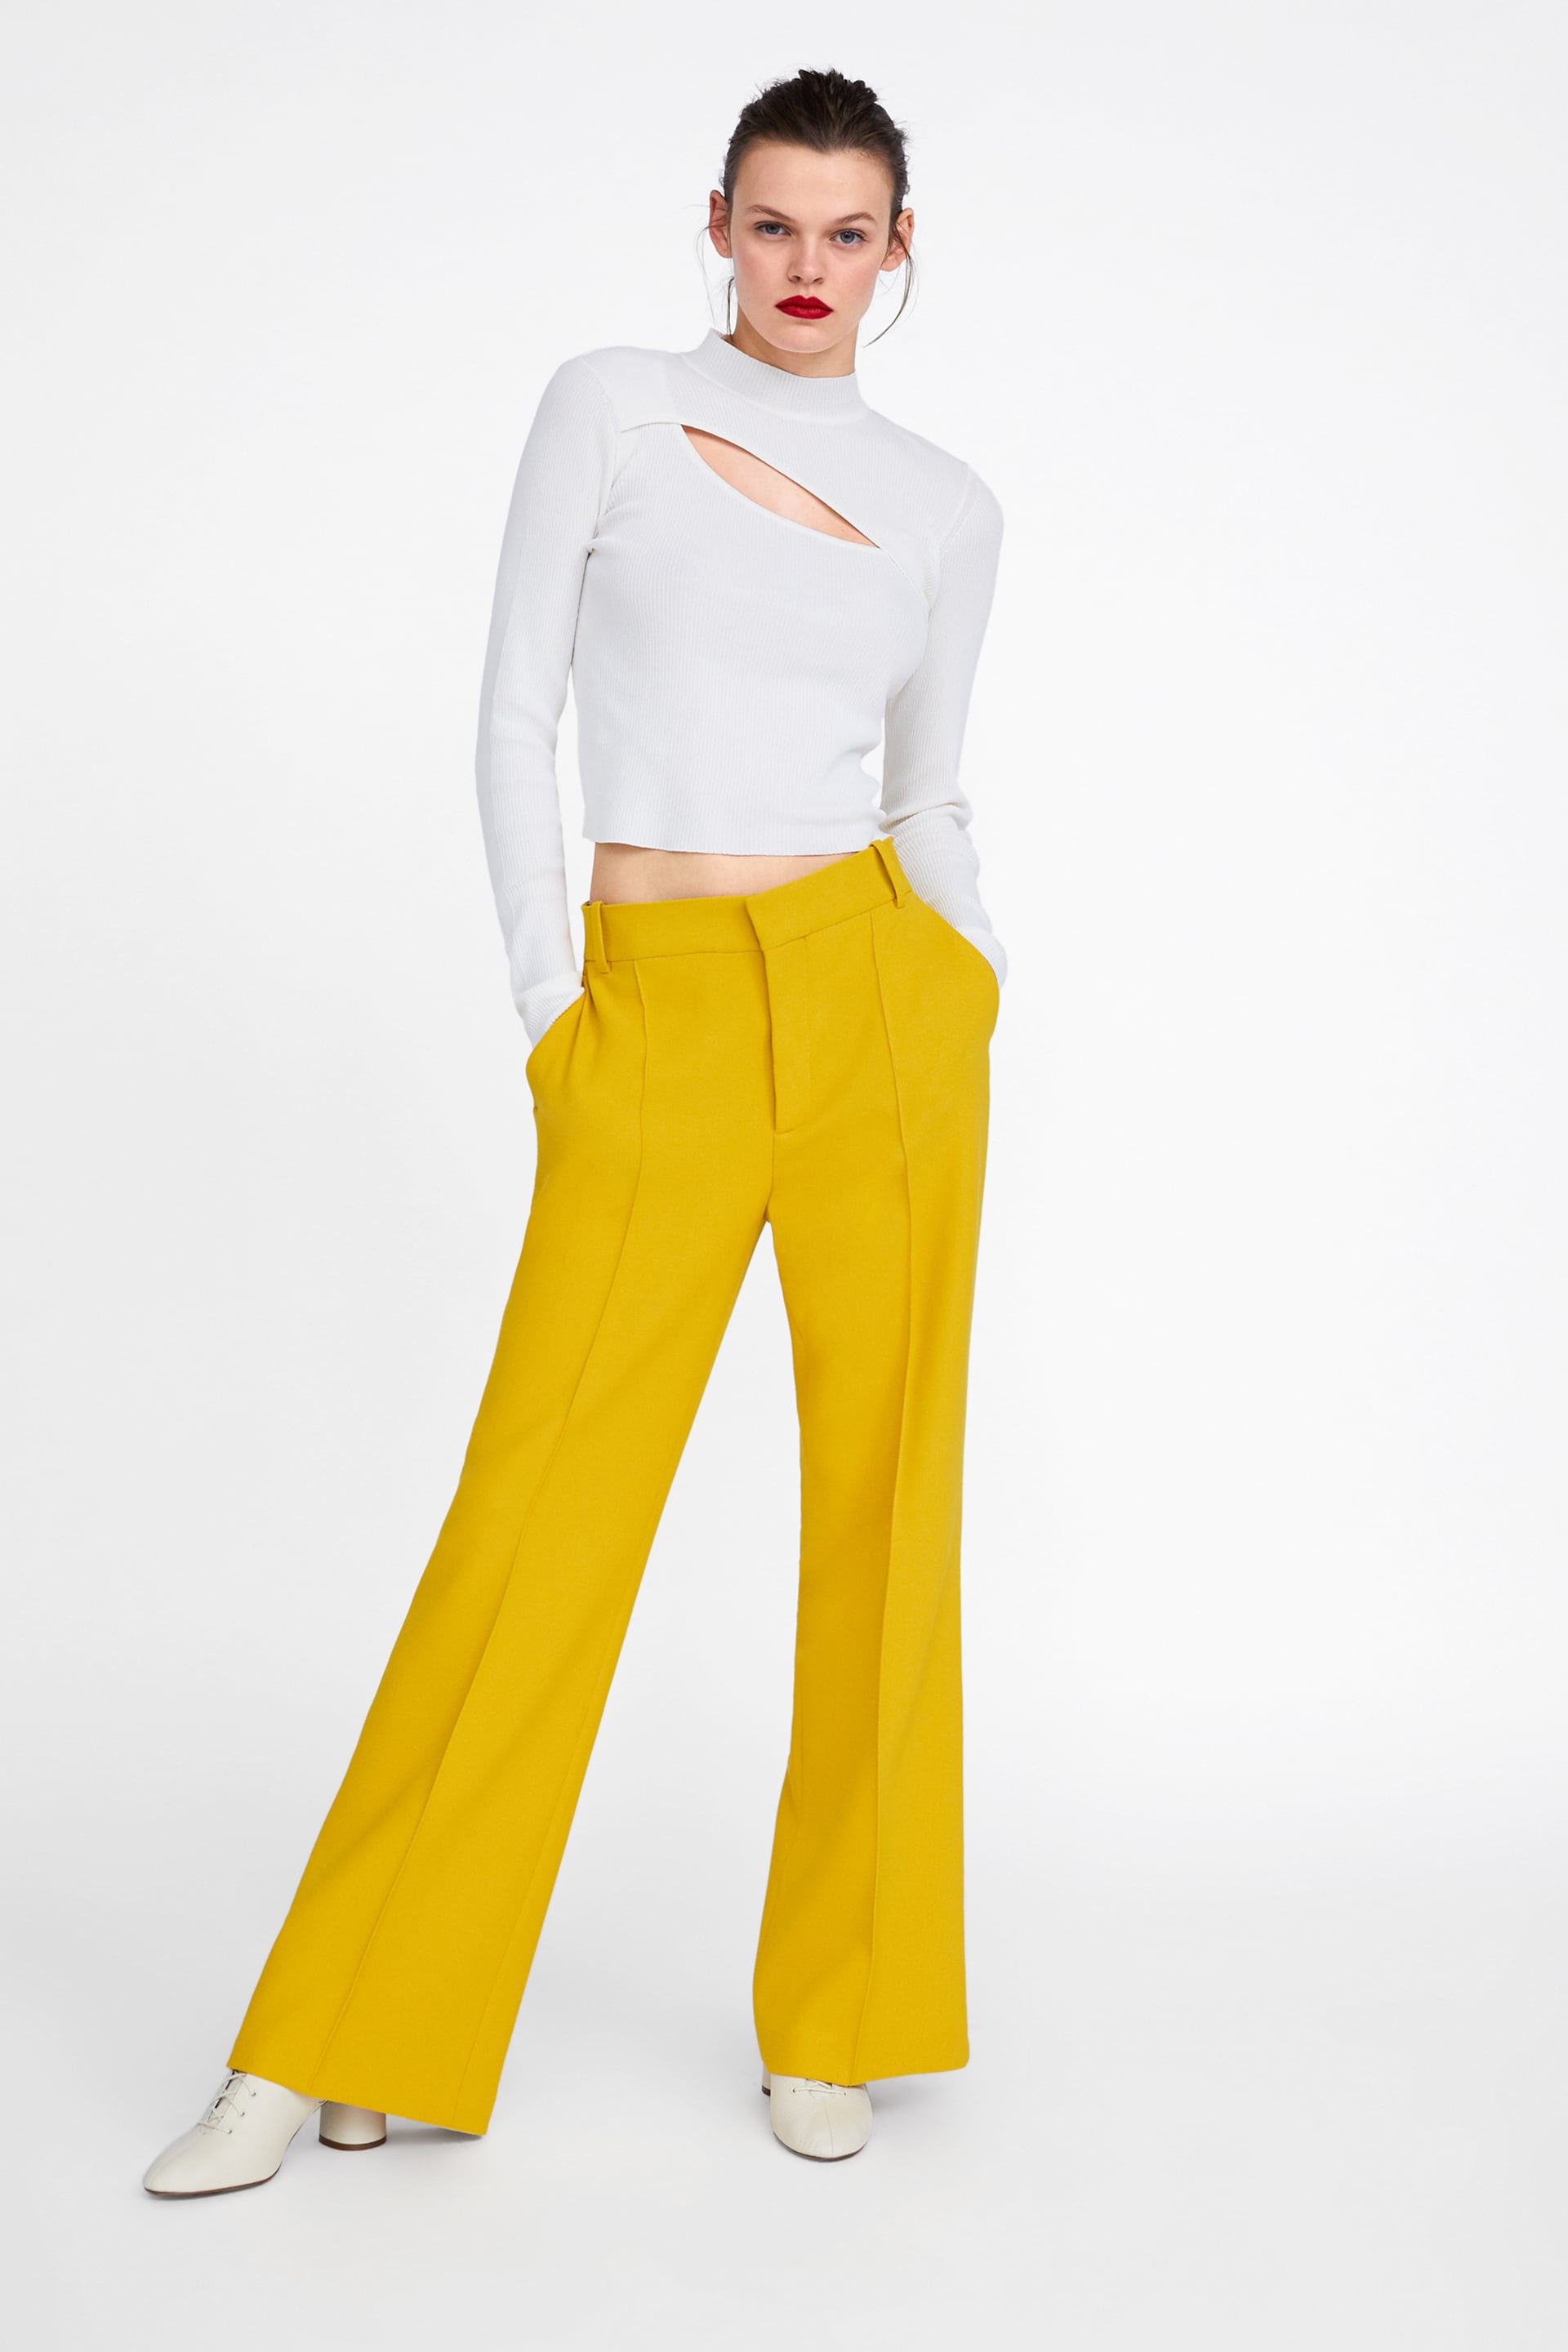 zara yellow pants